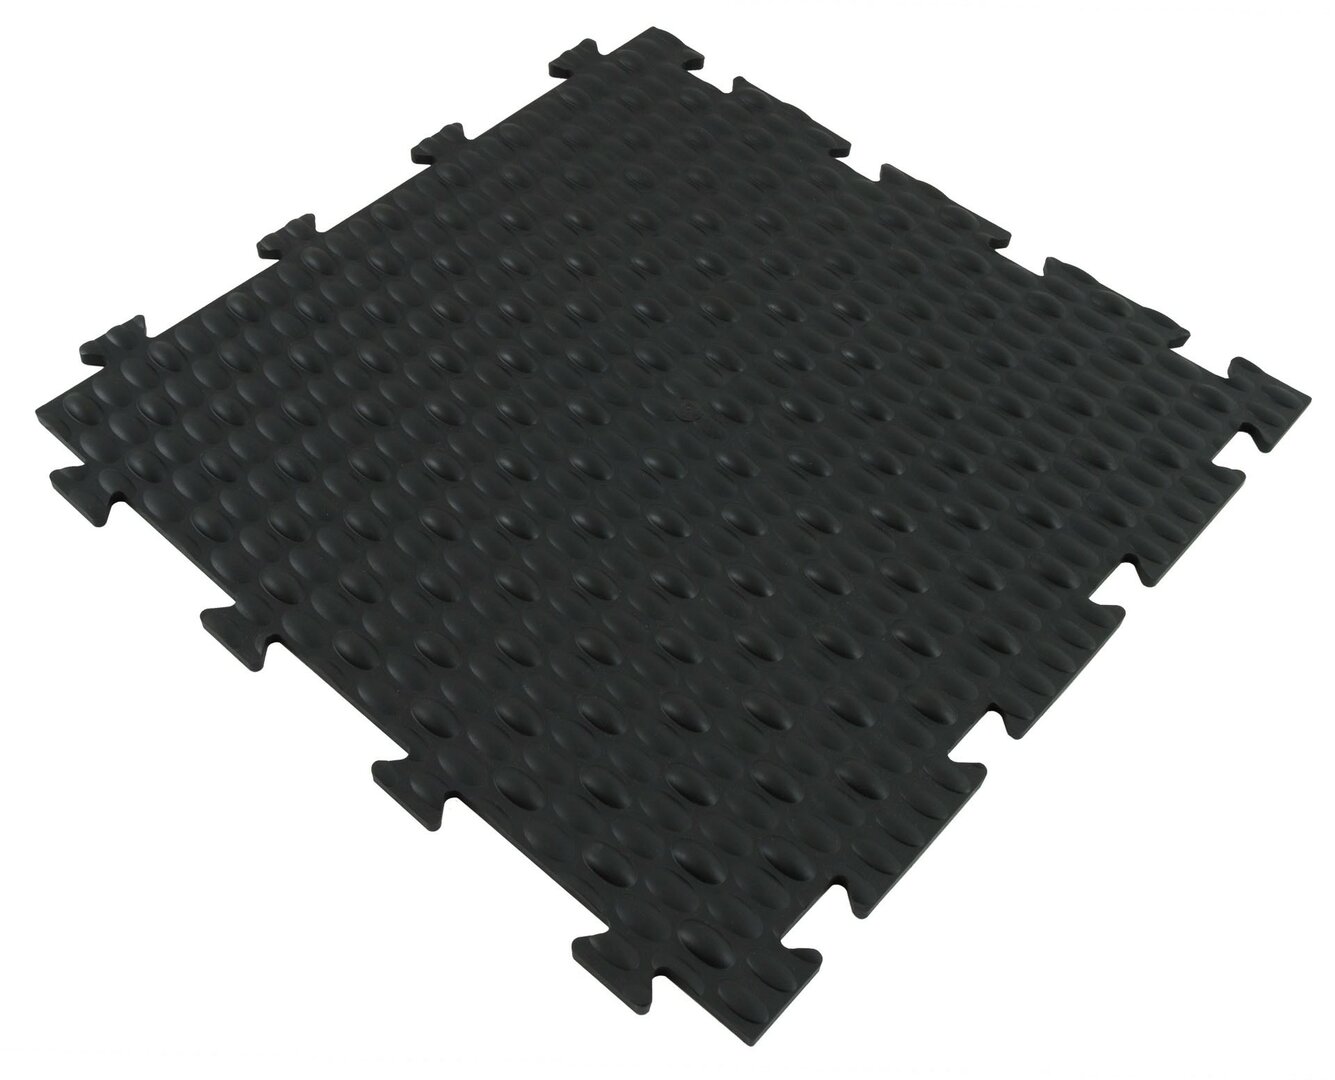 Černá PVC vinylová zátěžová puzzle protiúnavová dlažba Tenax - délka 50 cm, šířka 50 cm a výška 0,8 cm